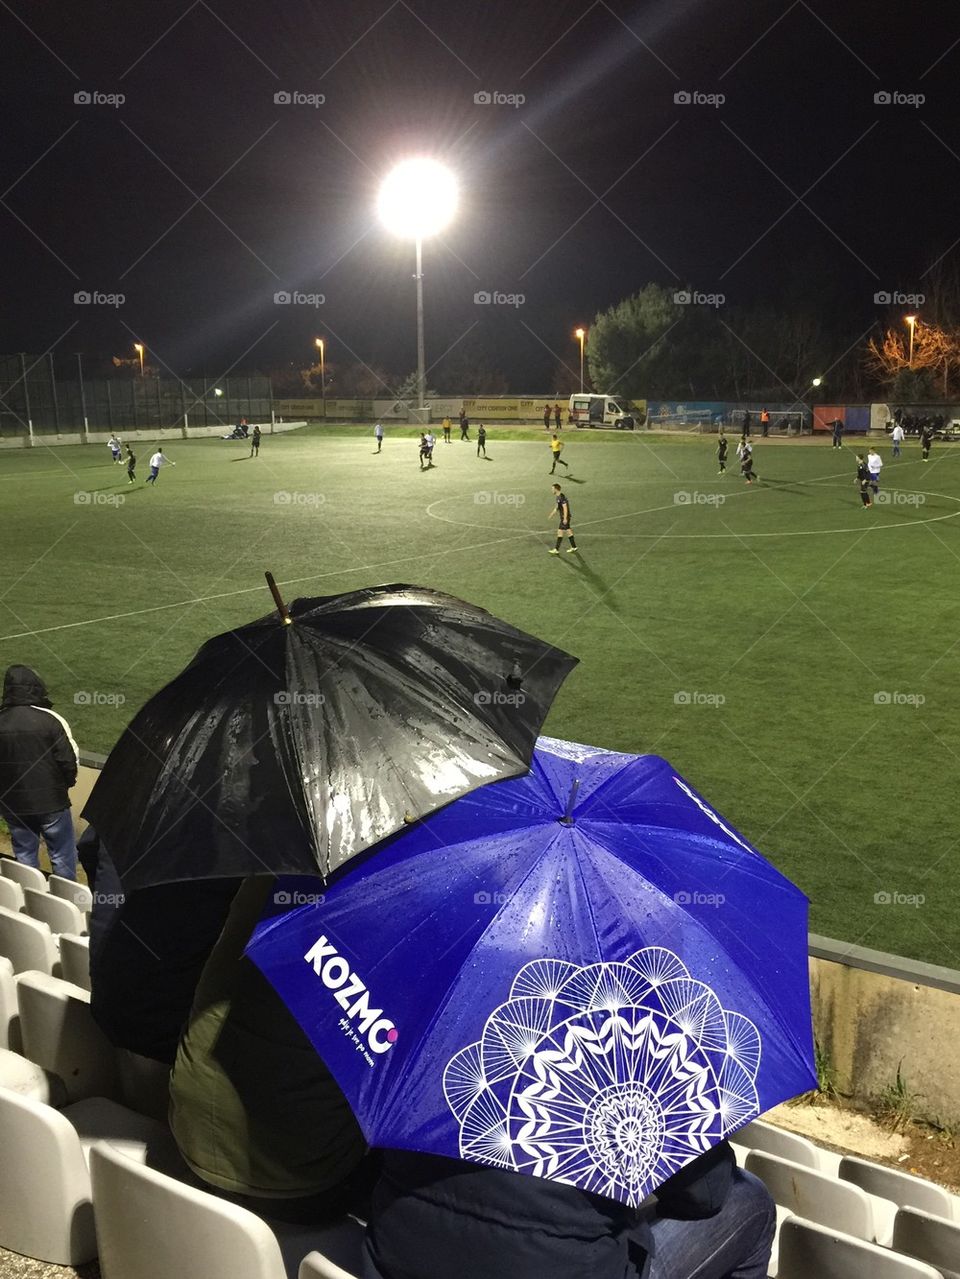 Football and umbrellas